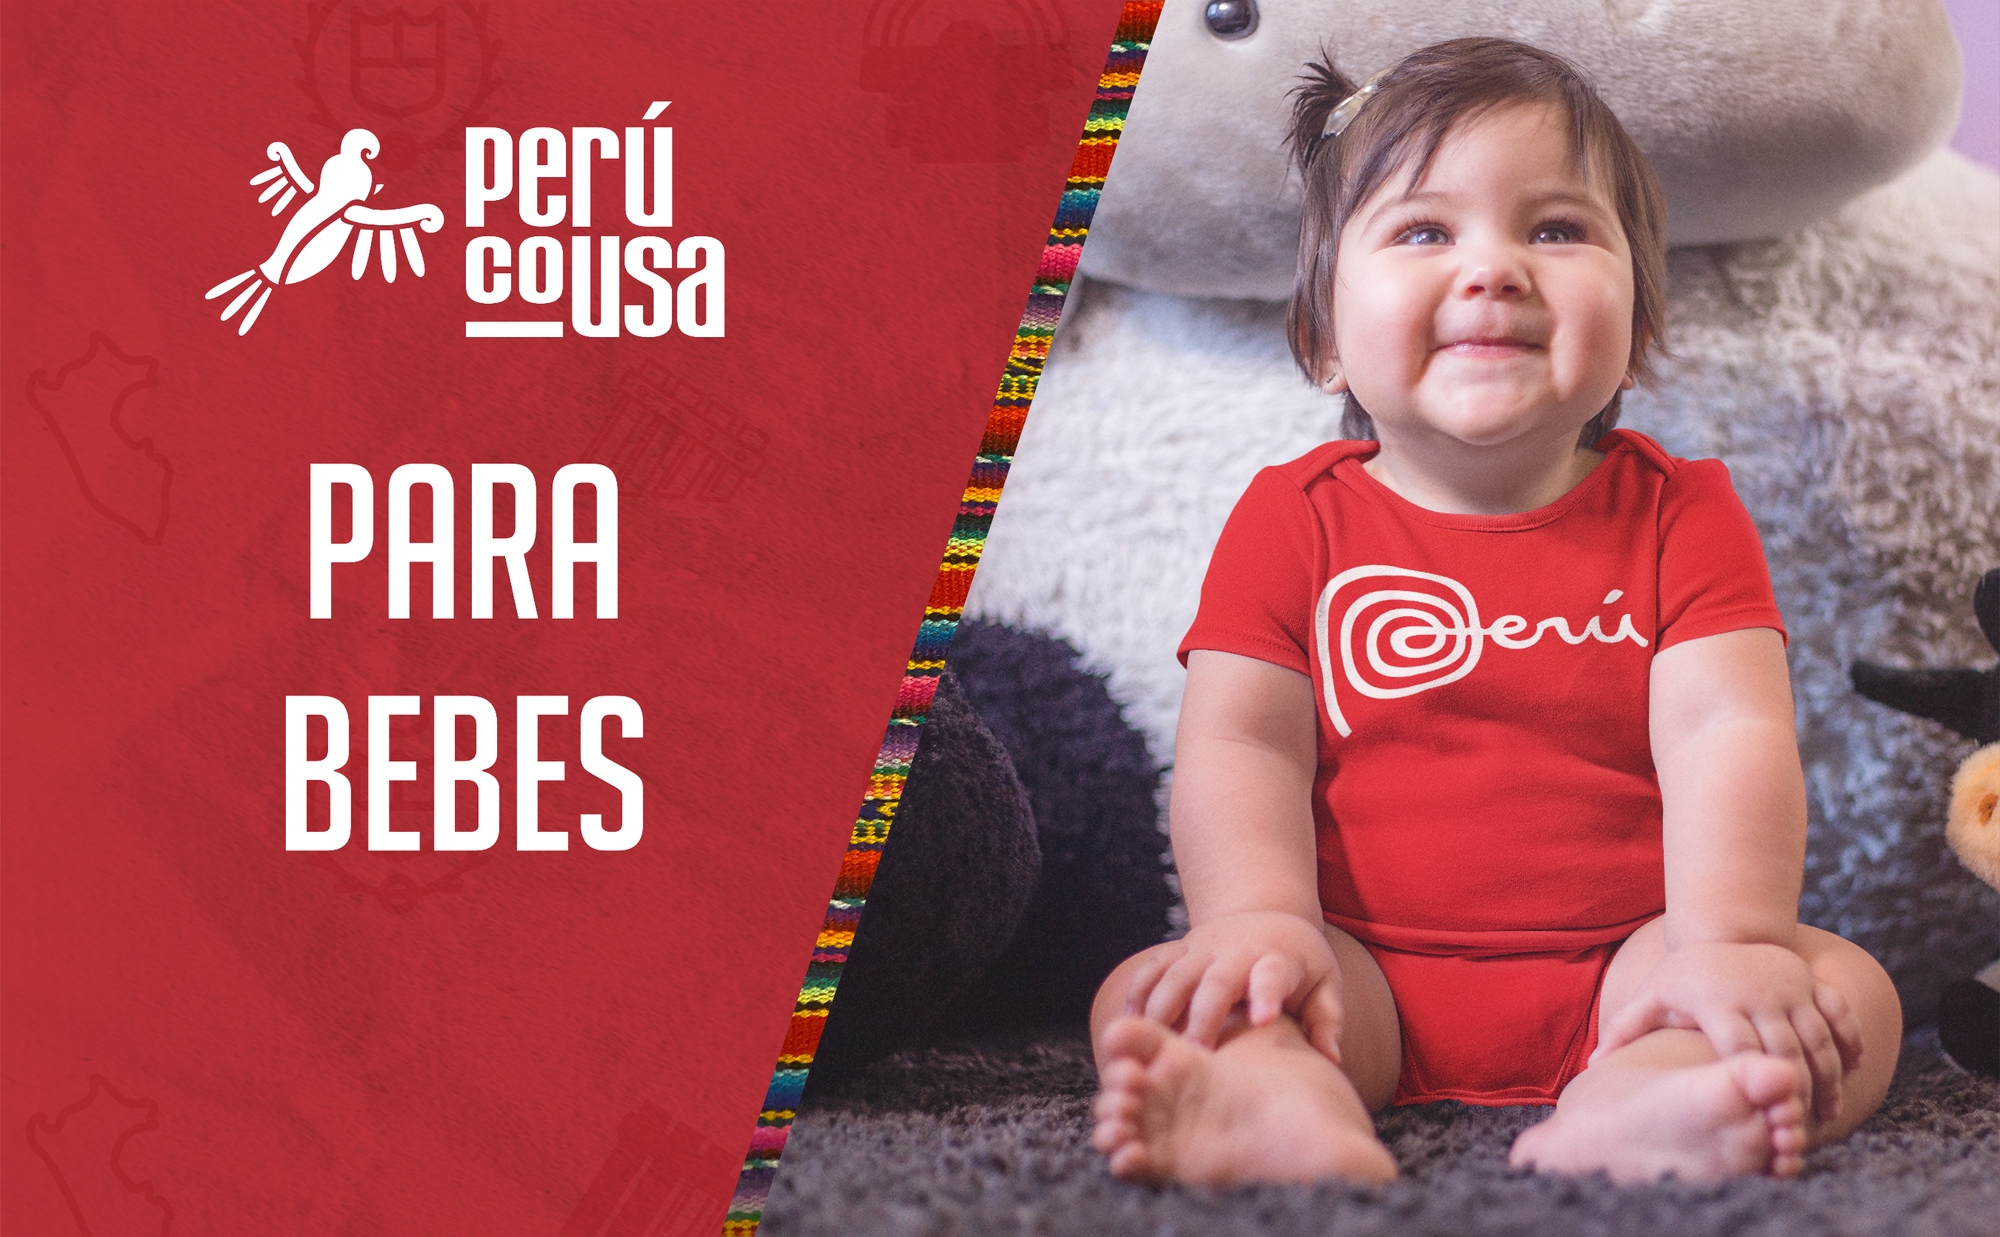 PeruCoUSA Peruvian Clothing Ropa Peruana for Babies